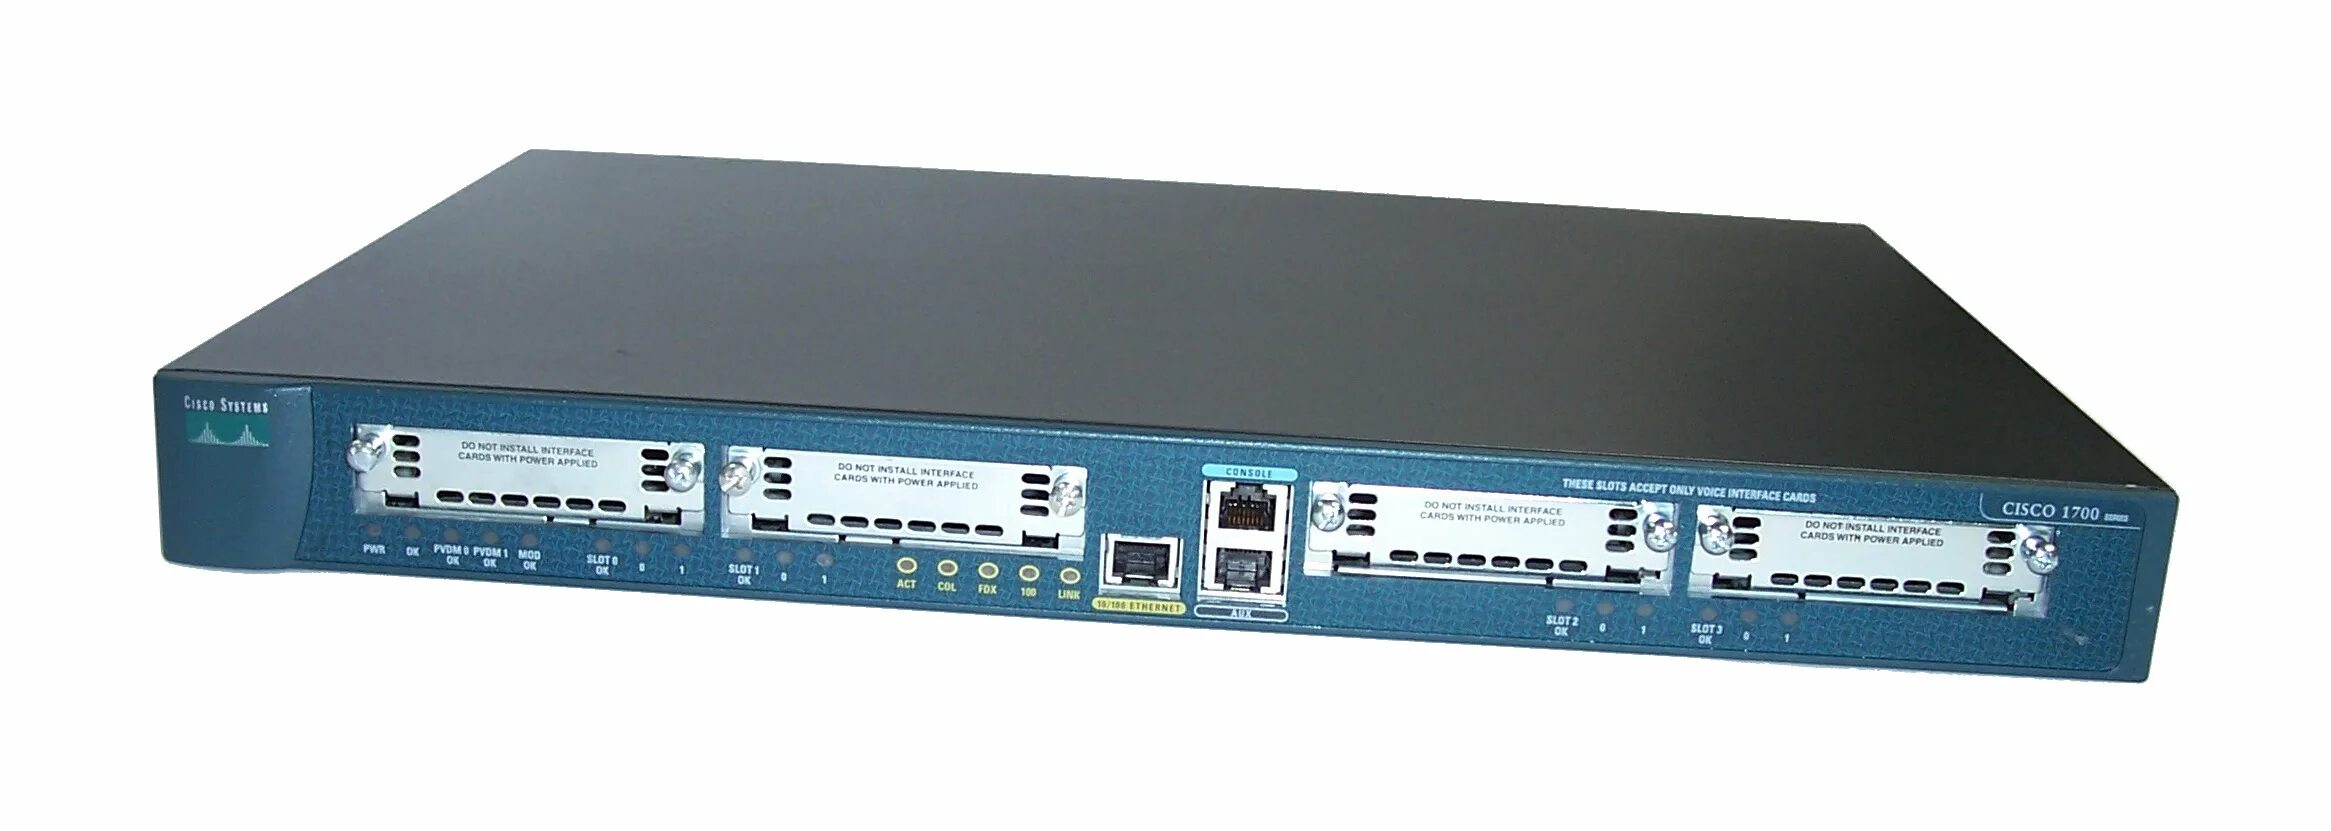 C 1700. Cisco 1760 маршрутизатор. Cisco 1700 Router. Cisco 1700 Series. Cisco Systems Cisco 1700.